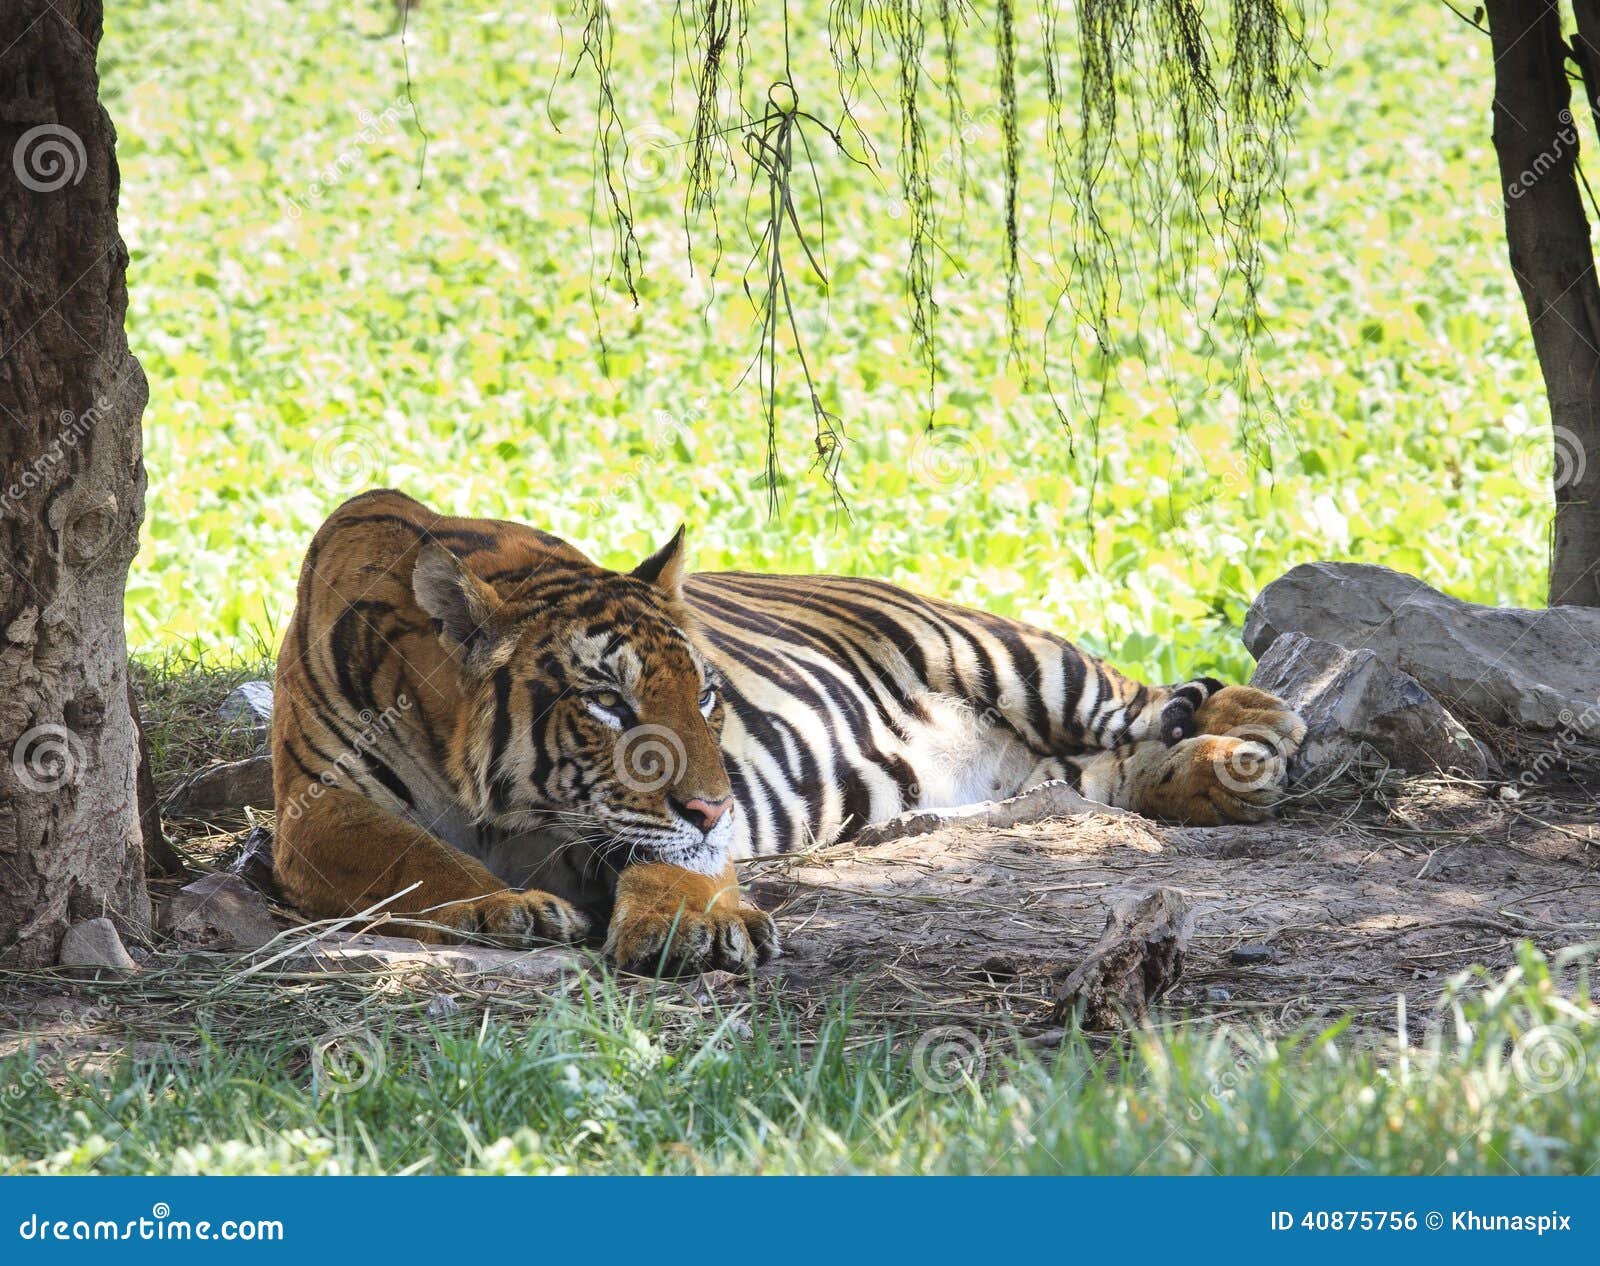 indochina tiger lying on field